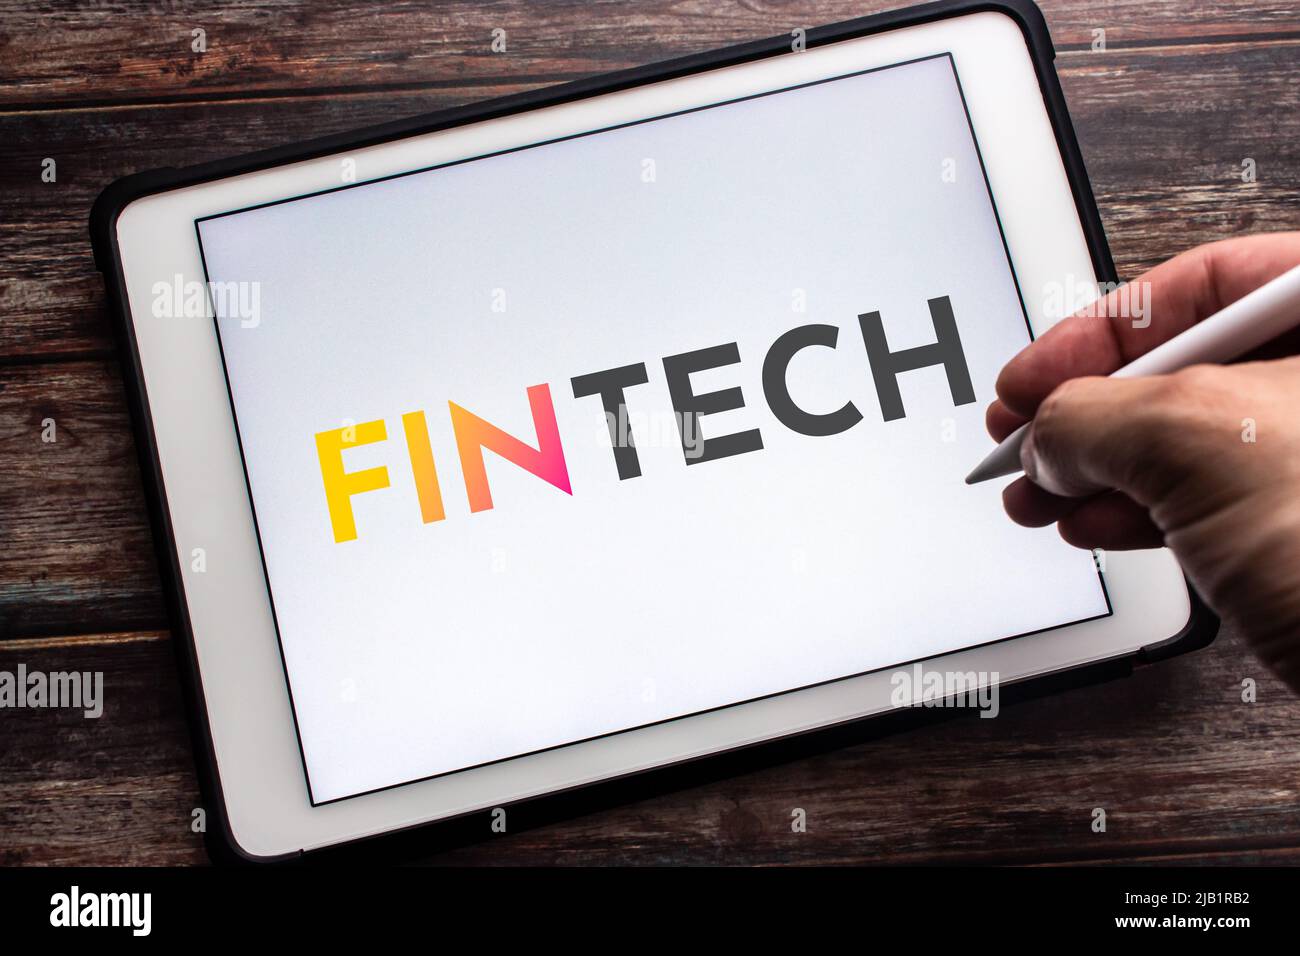 Closeup keyword FinTech (Financial technology) on tablet. The technology & financial methods concept. Man hand holding wireless stylus pen Stock Photo